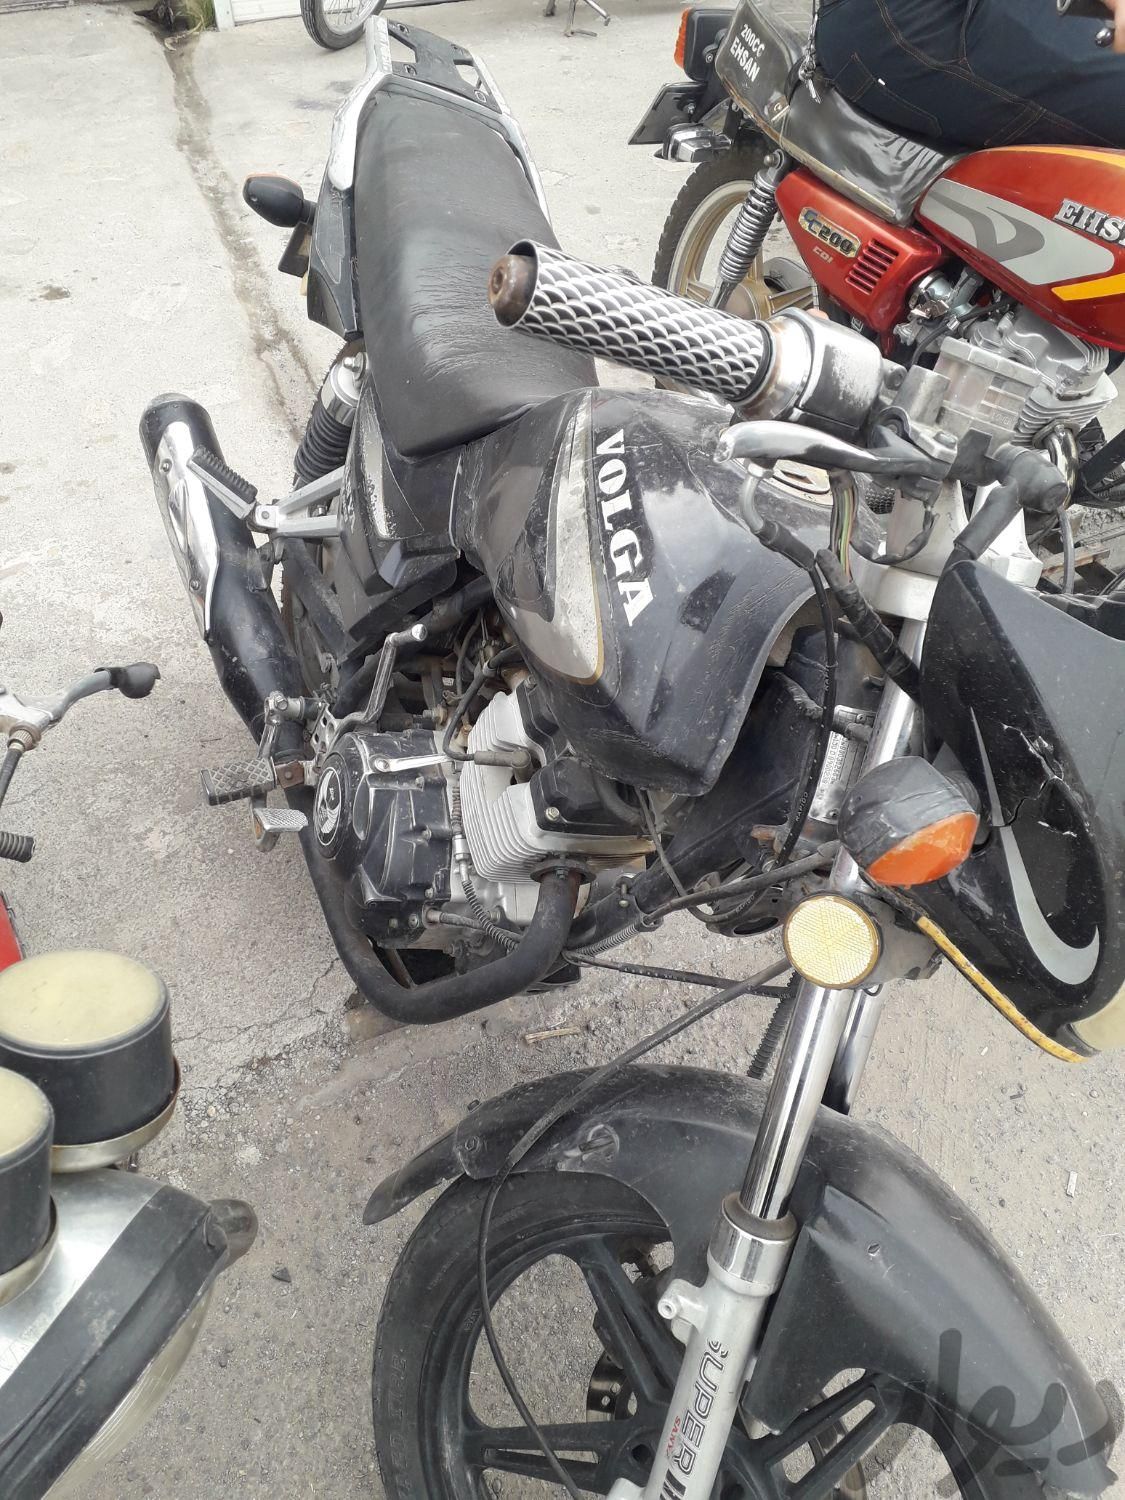 موتورسیکلت ولگا|موتورسیکلت|آذرشهر, |دیوار